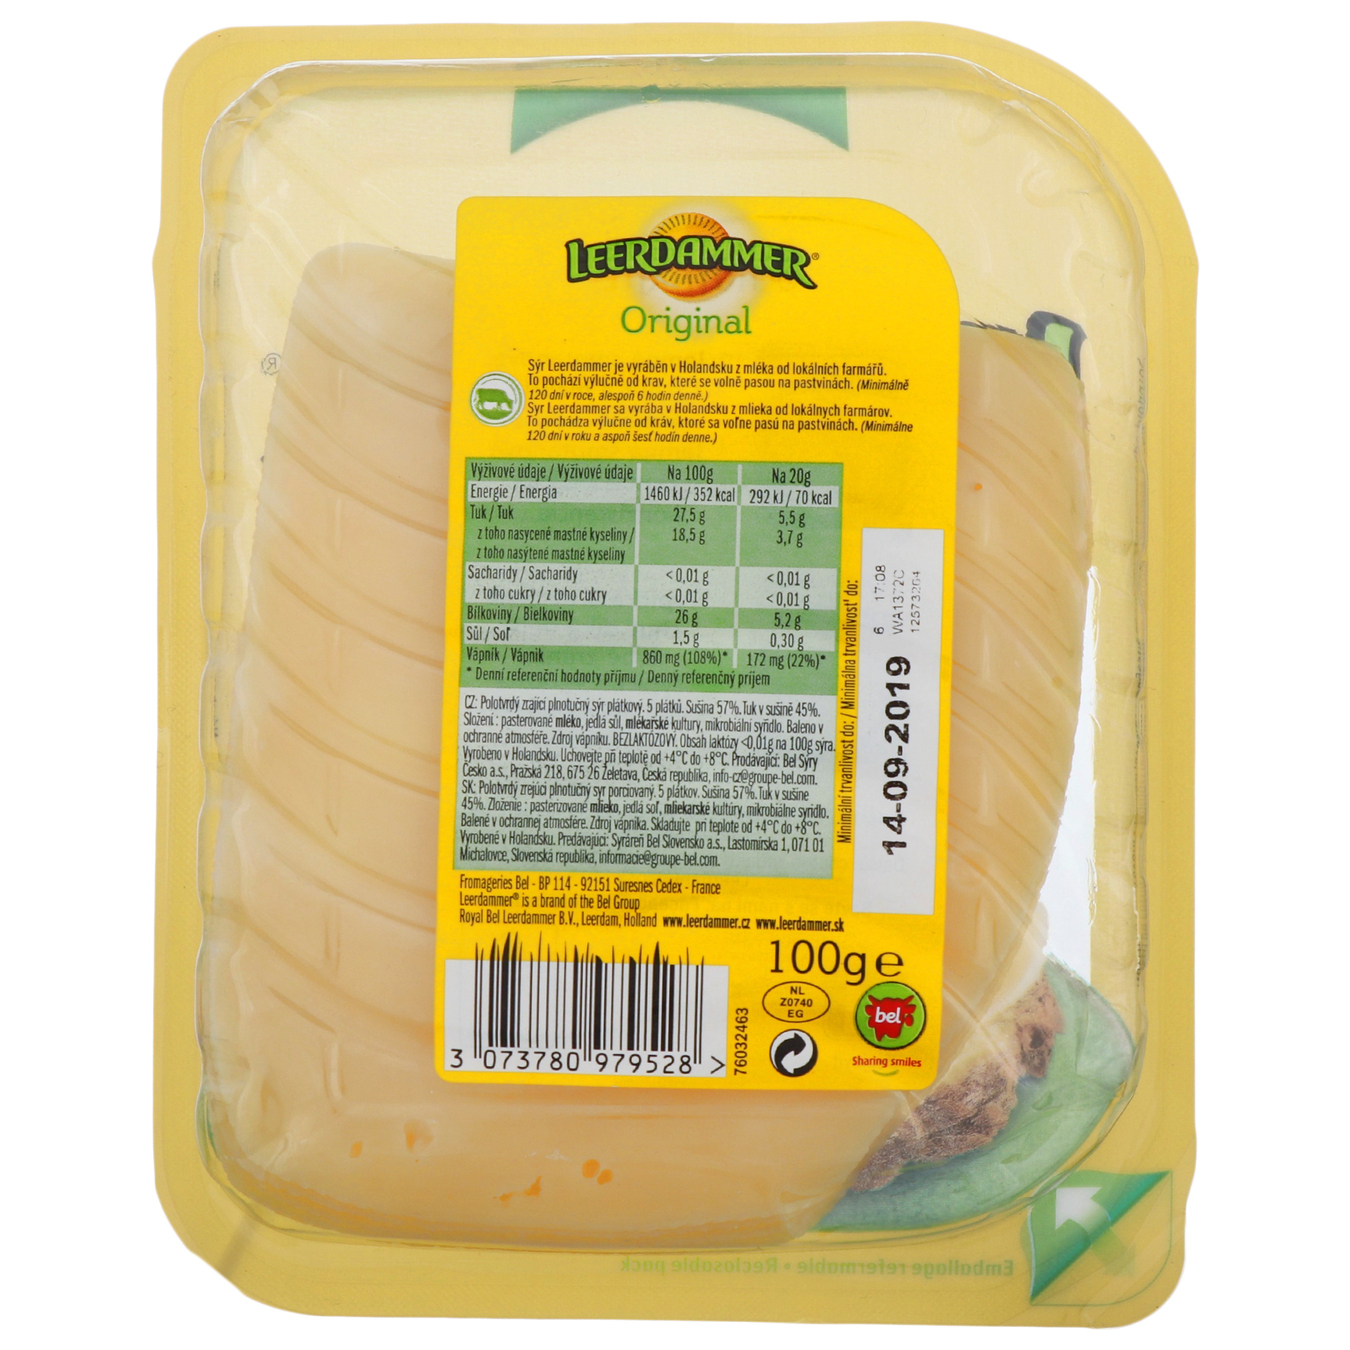 Leerdammer Leerdammer Original hard cheese 0,45 100g   2